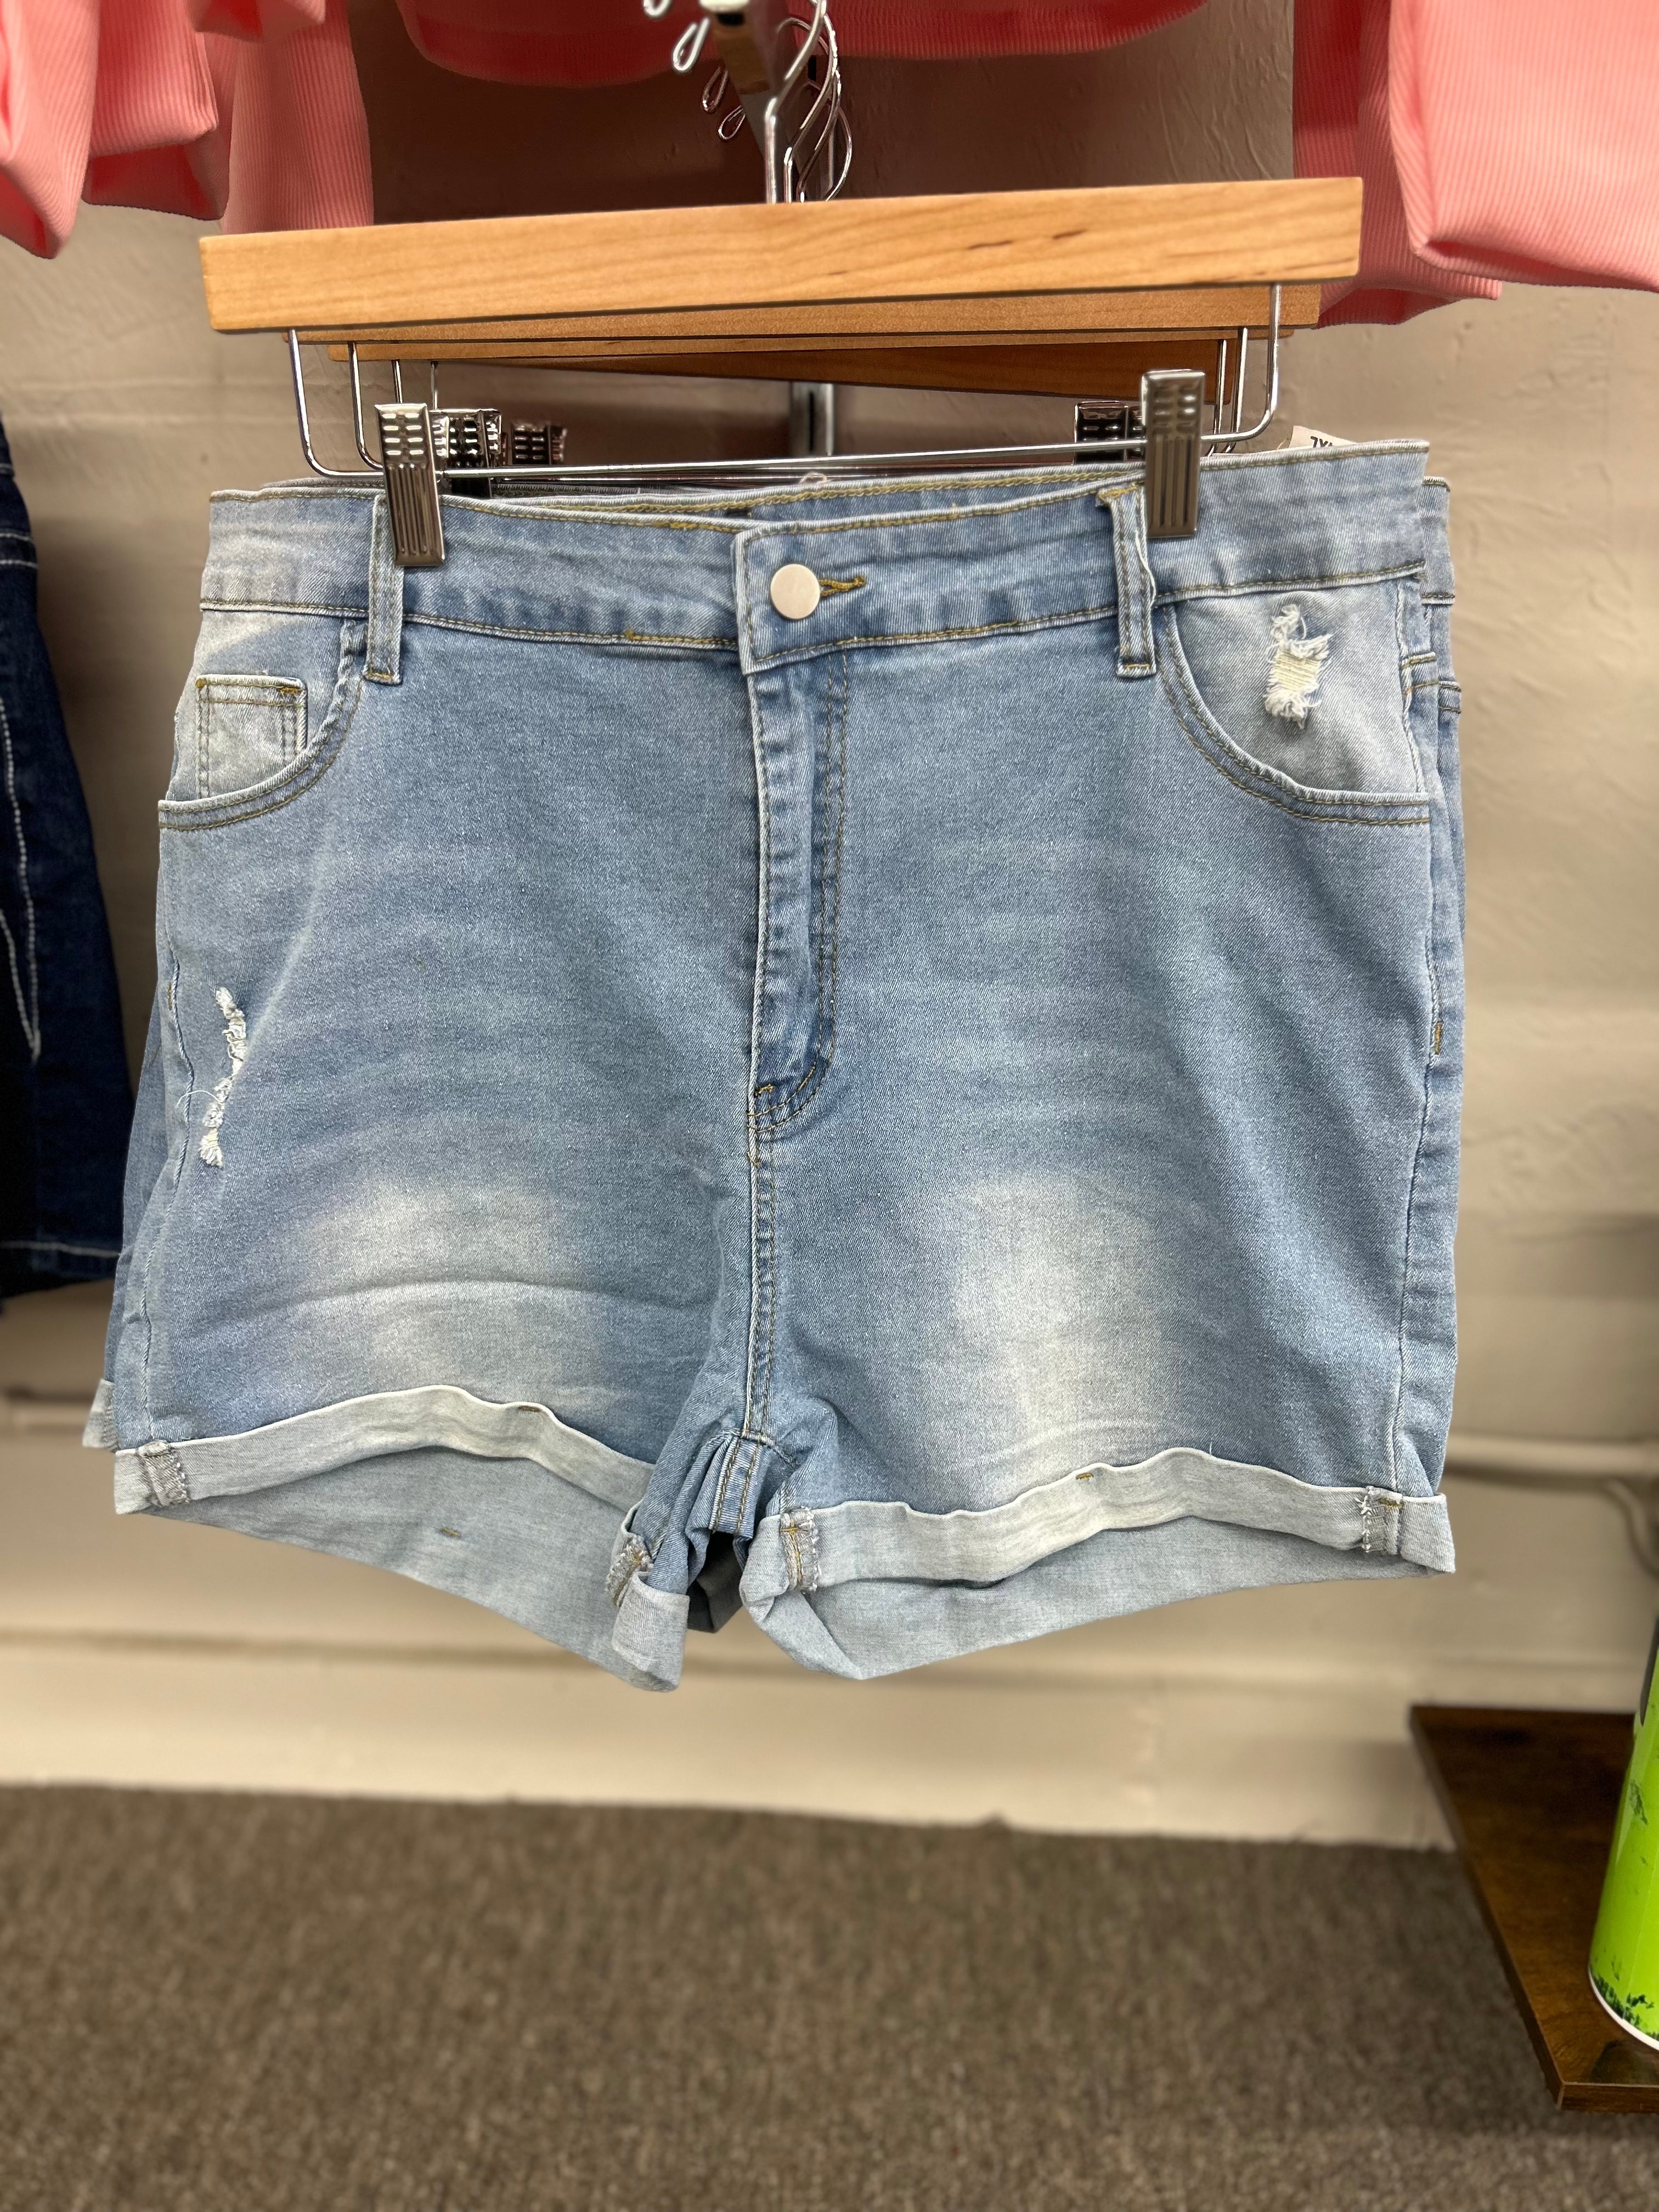 Curvy rolled edge jean shorts